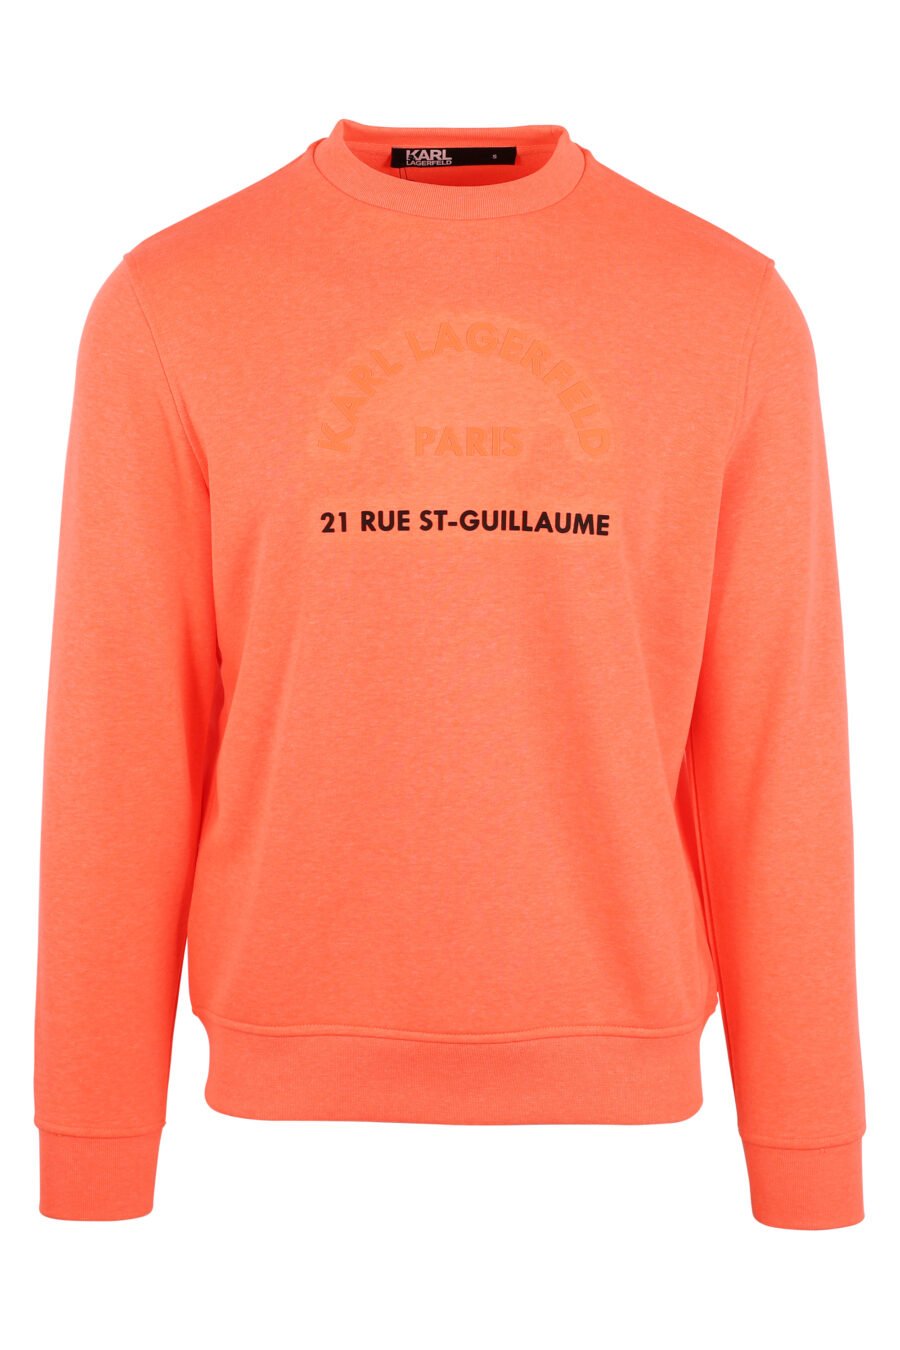 Camisola laranja com maxilogo "rue st guillaume" preto - IMG 9459